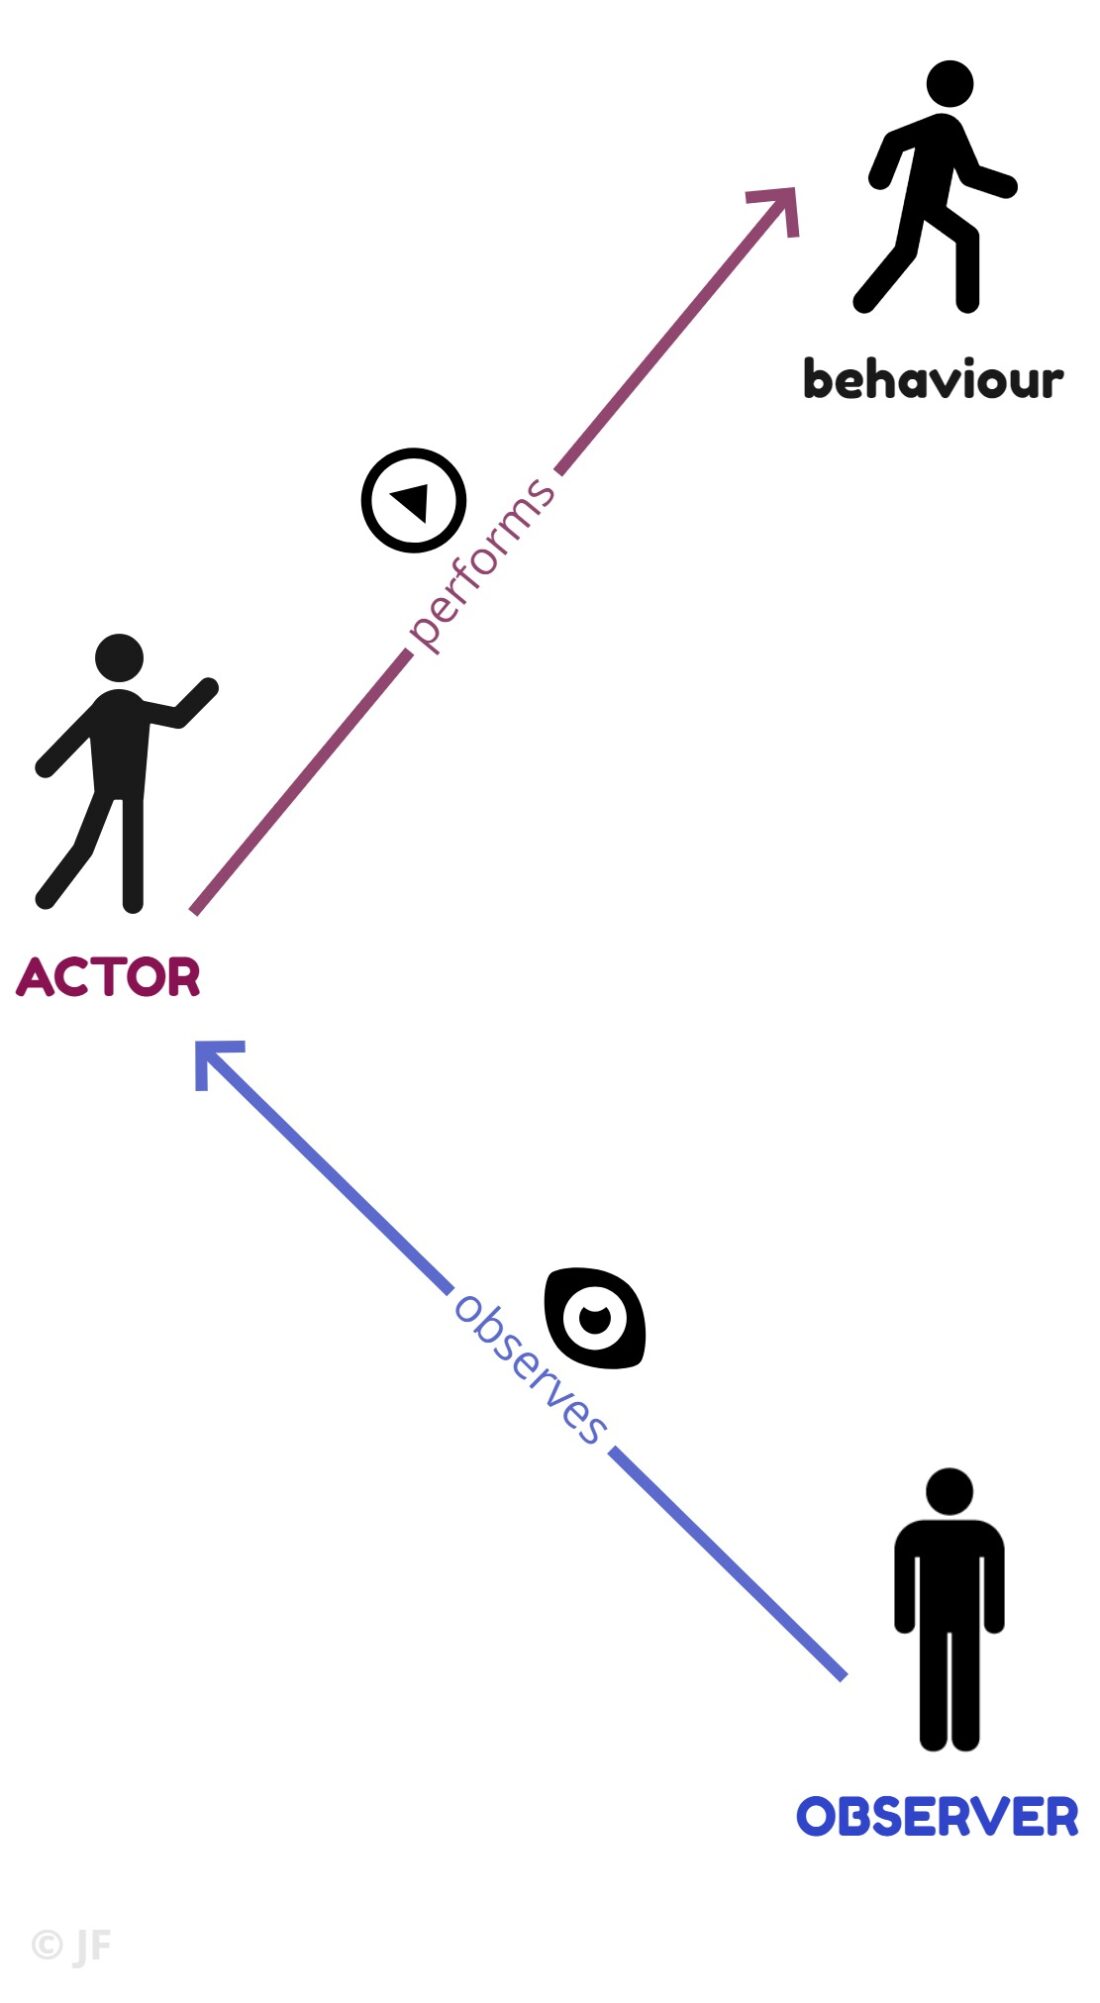 an actor observer bias